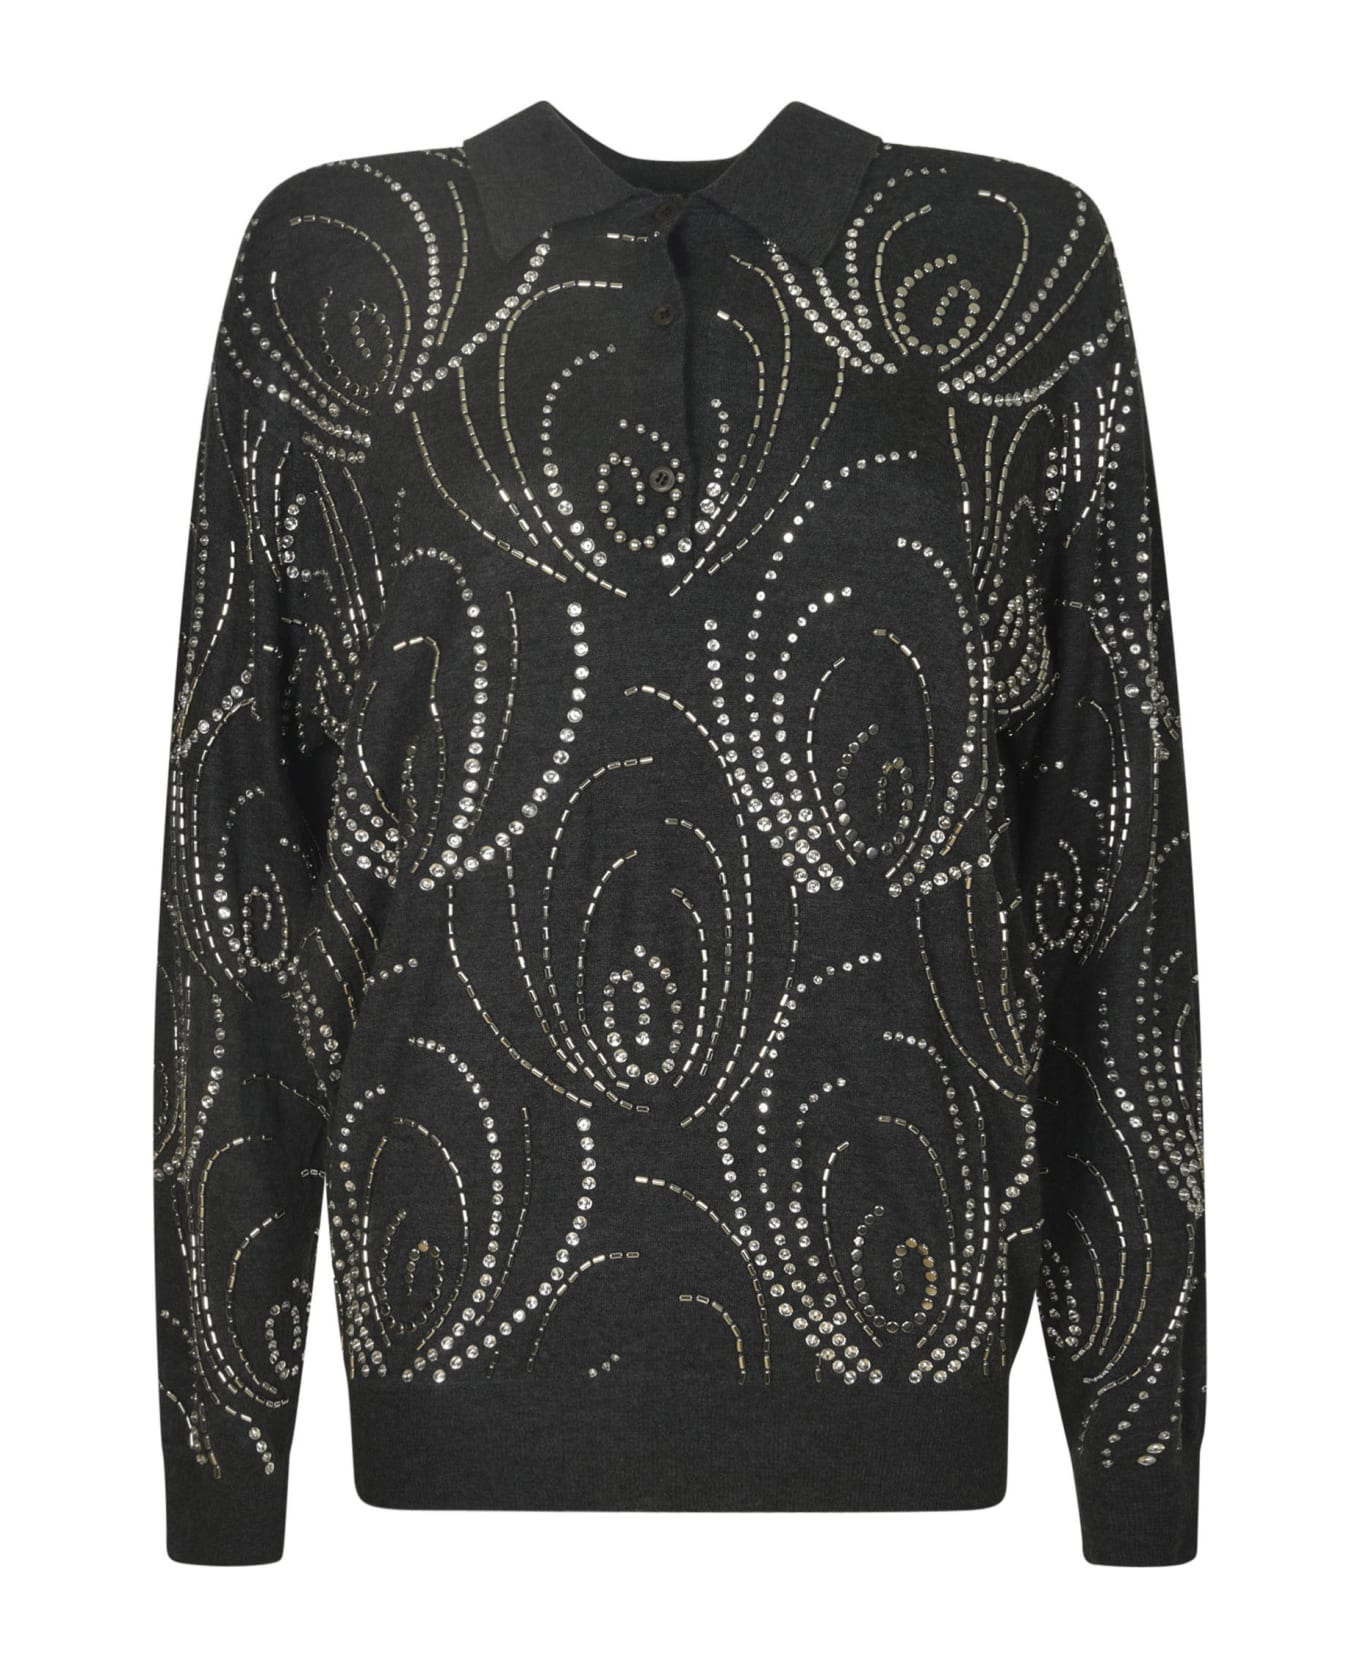 Prada Embellished Sweater - Anthracite